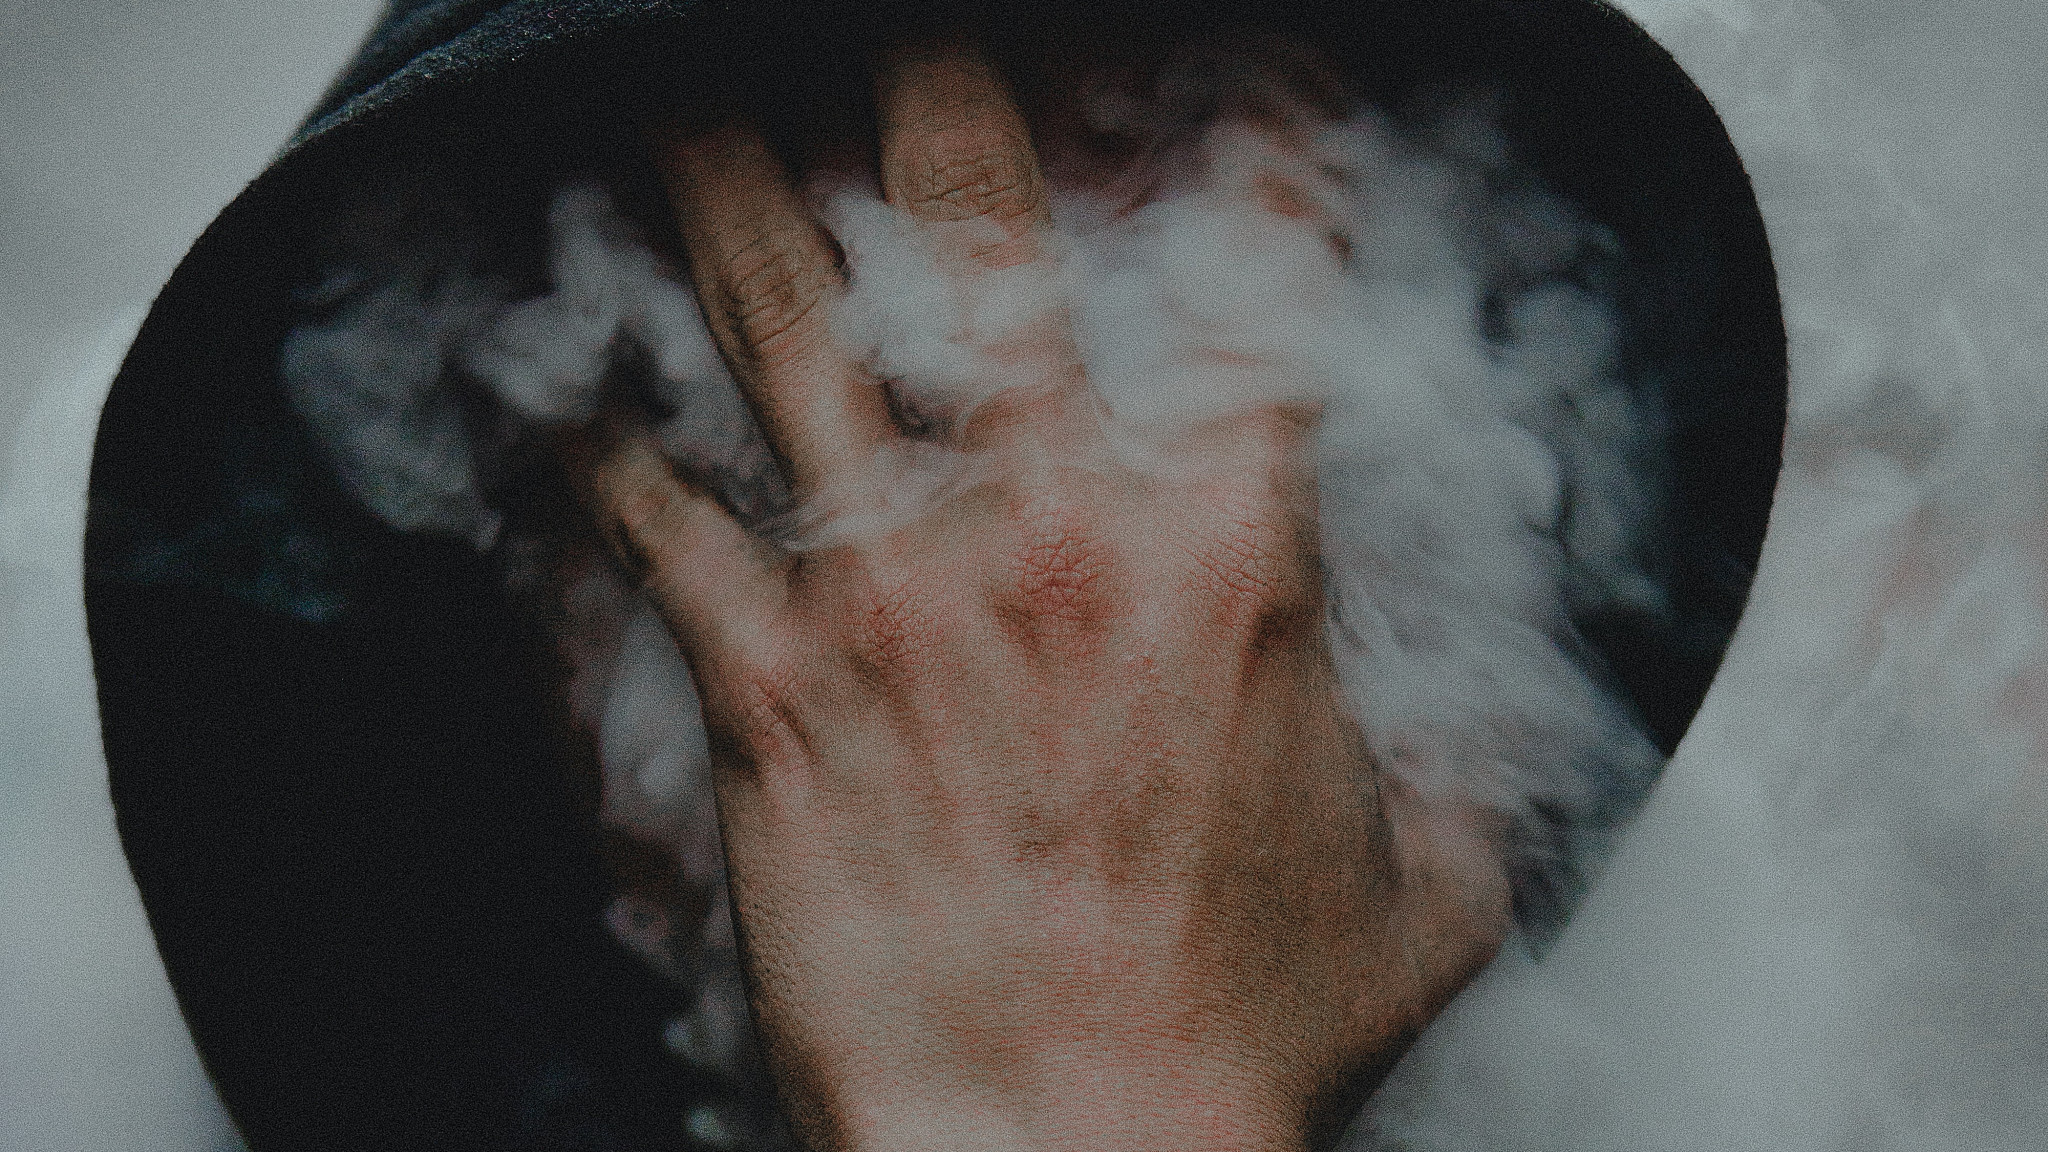 man engulfed in smoke